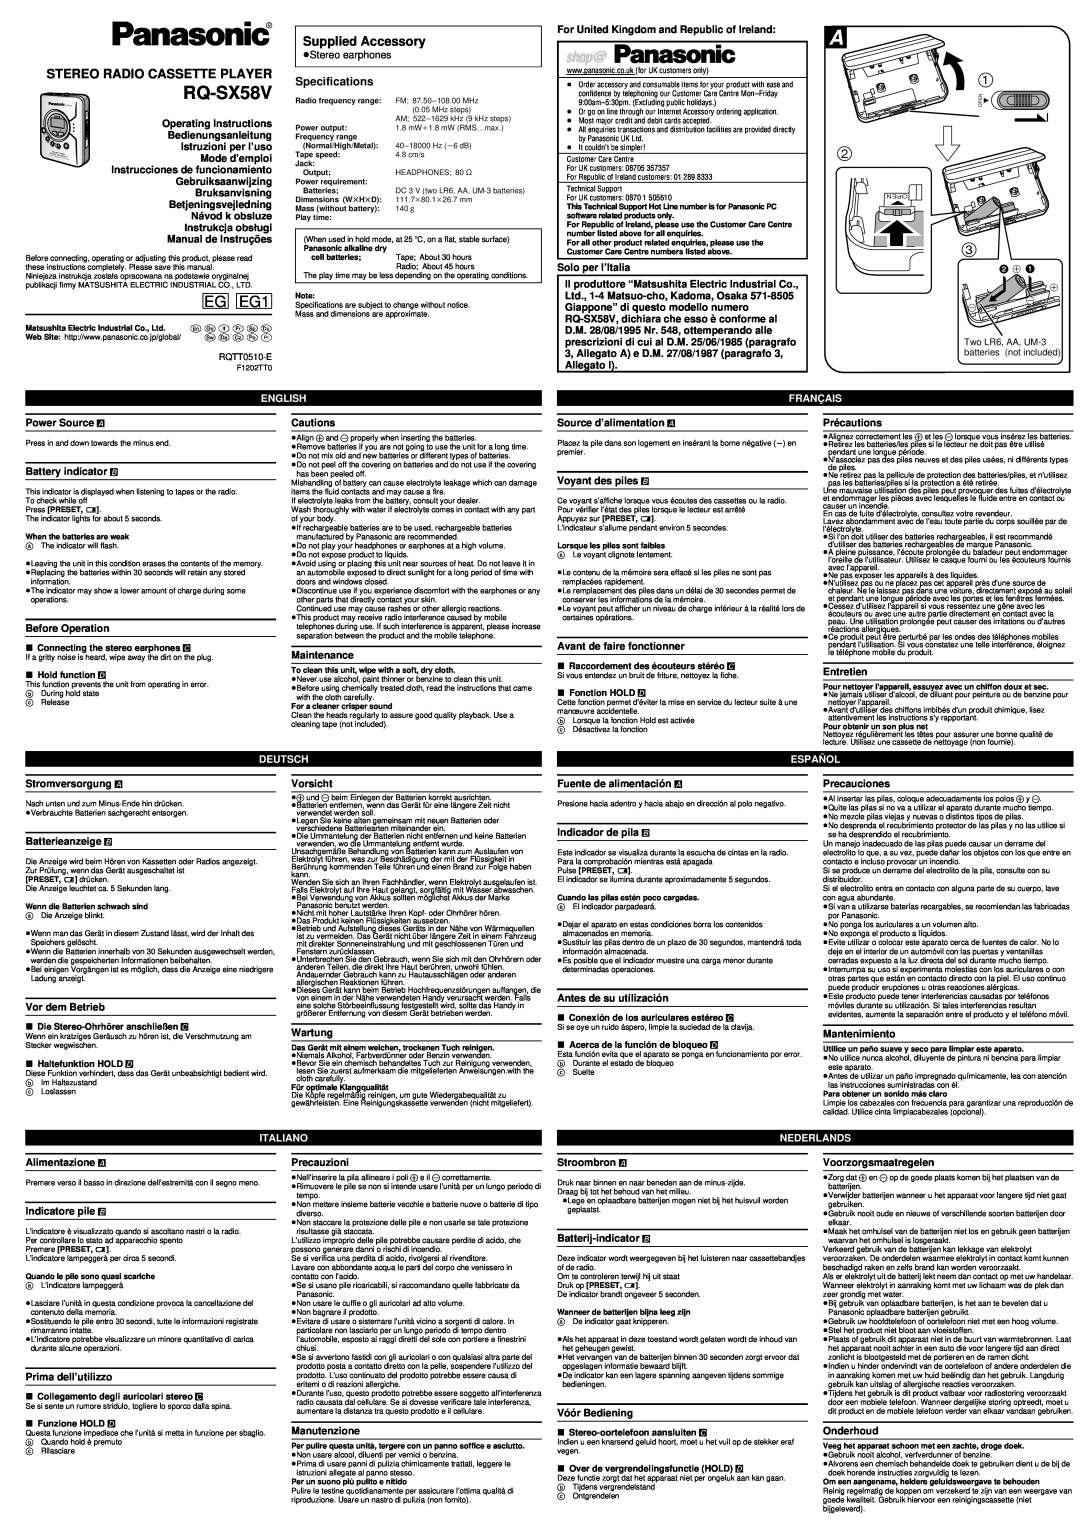 Panasonic RQ-SX58V specifications Specifications, English, Franç Ais, Deutsch, Españ Ol, Italiano, Nederlands 